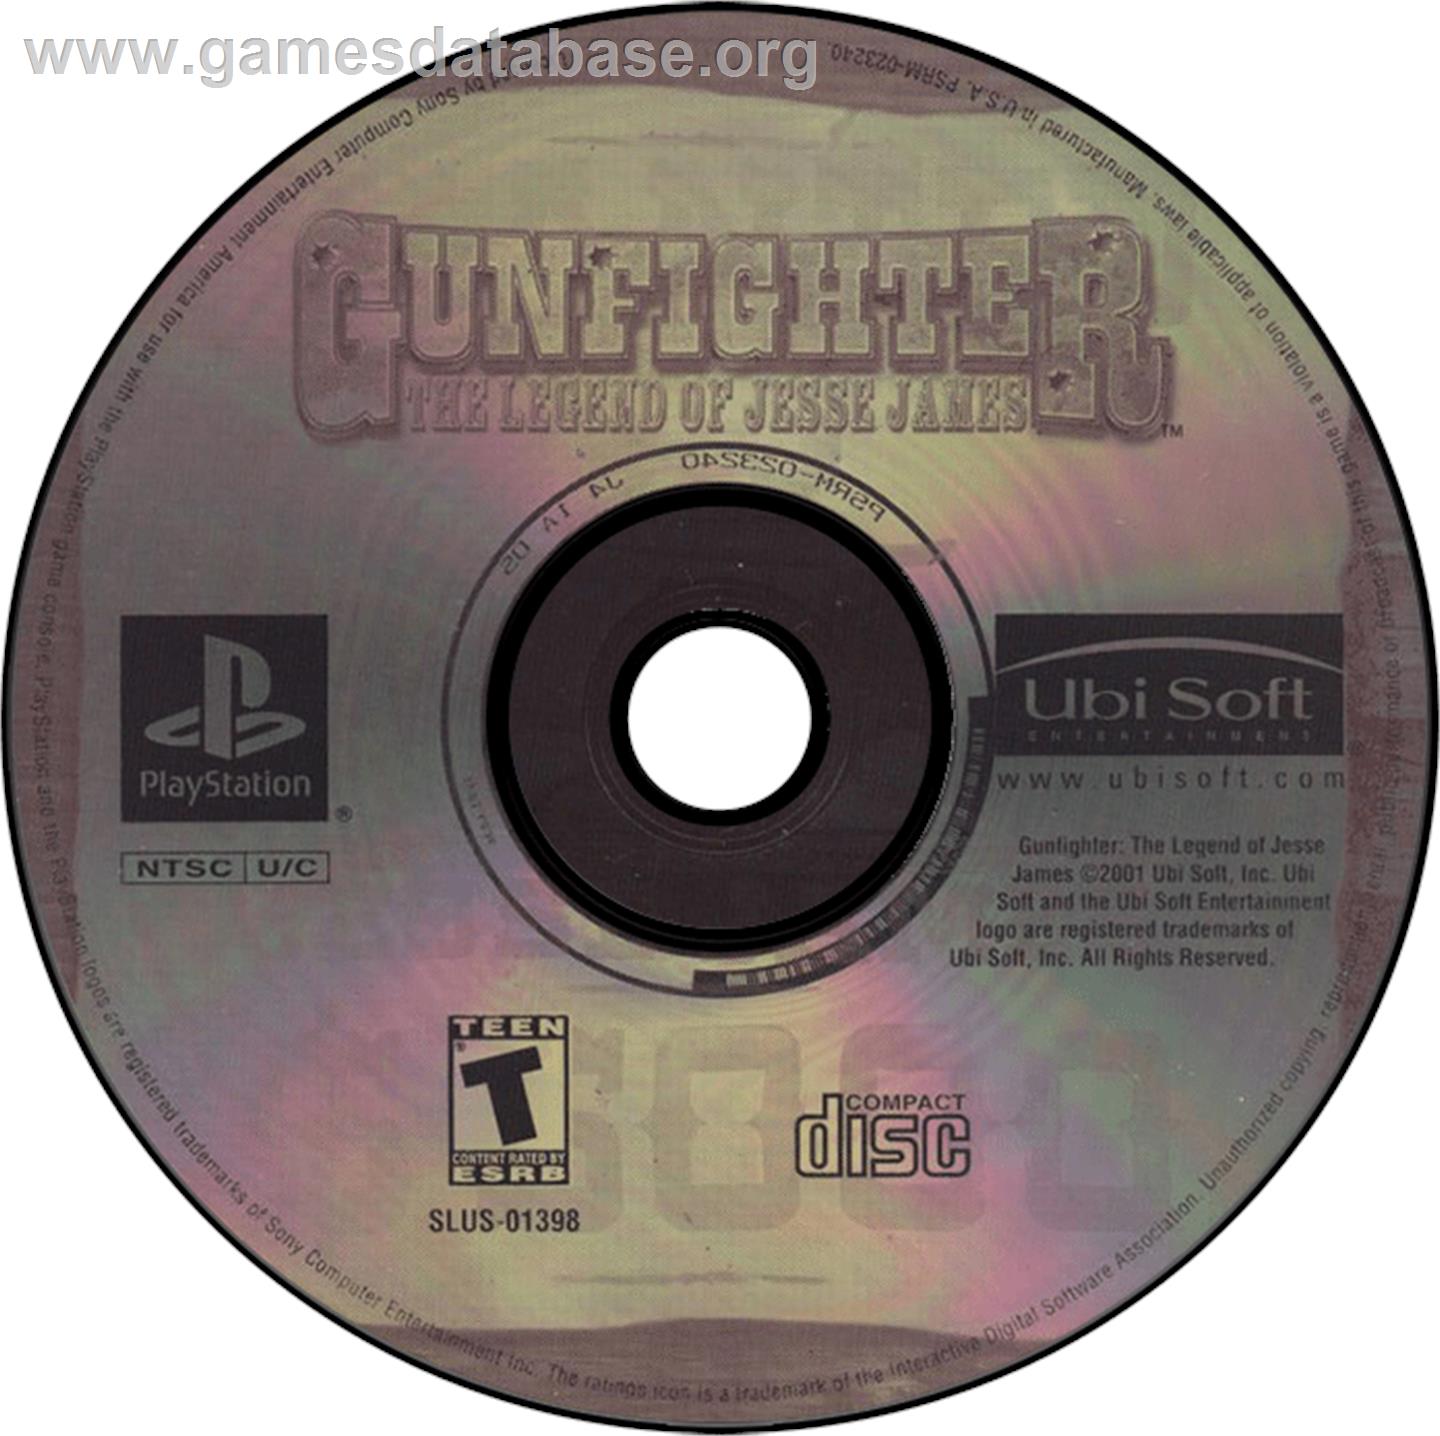 Gunfighter: The Legend of Jesse James - Sony Playstation - Artwork - Disc